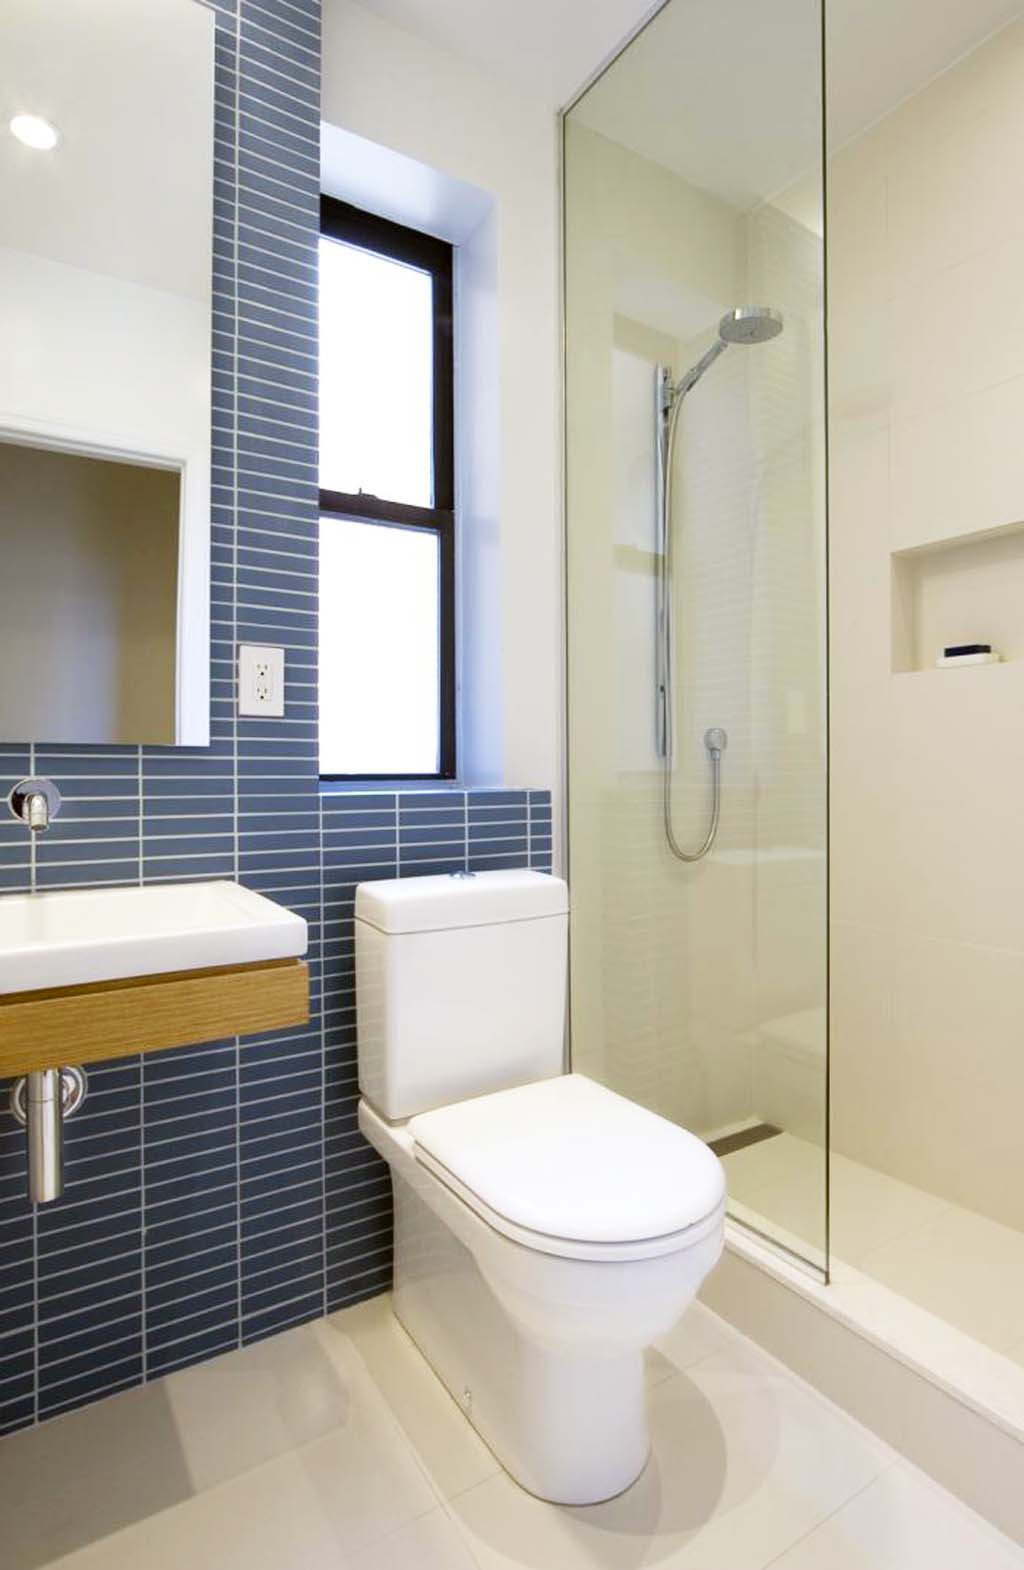 desain kamar mandi minimalis 1.5 x 1.5 arsitekhom